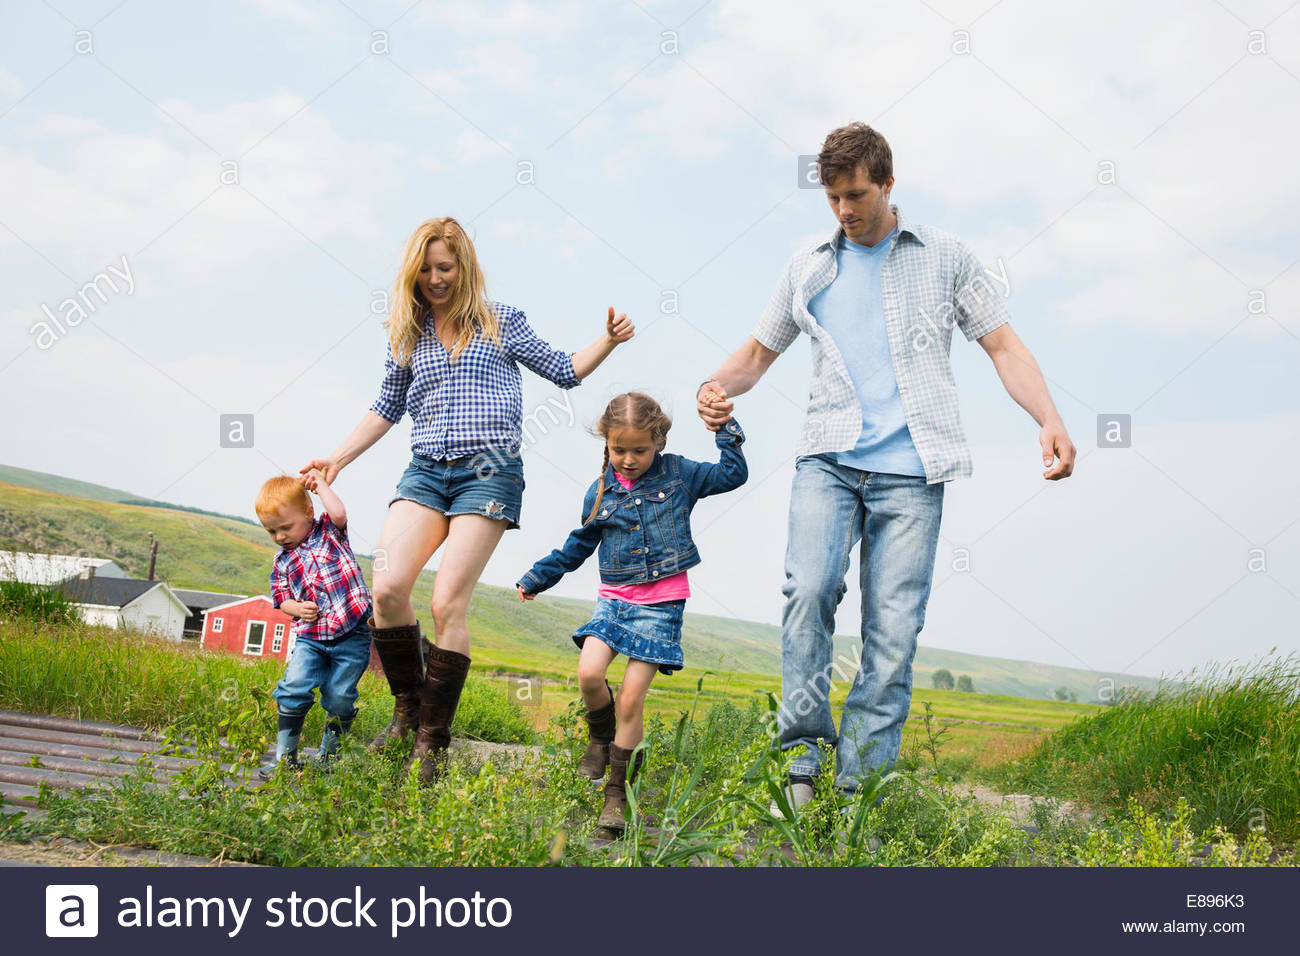 Family walking in rural field Stock Photo